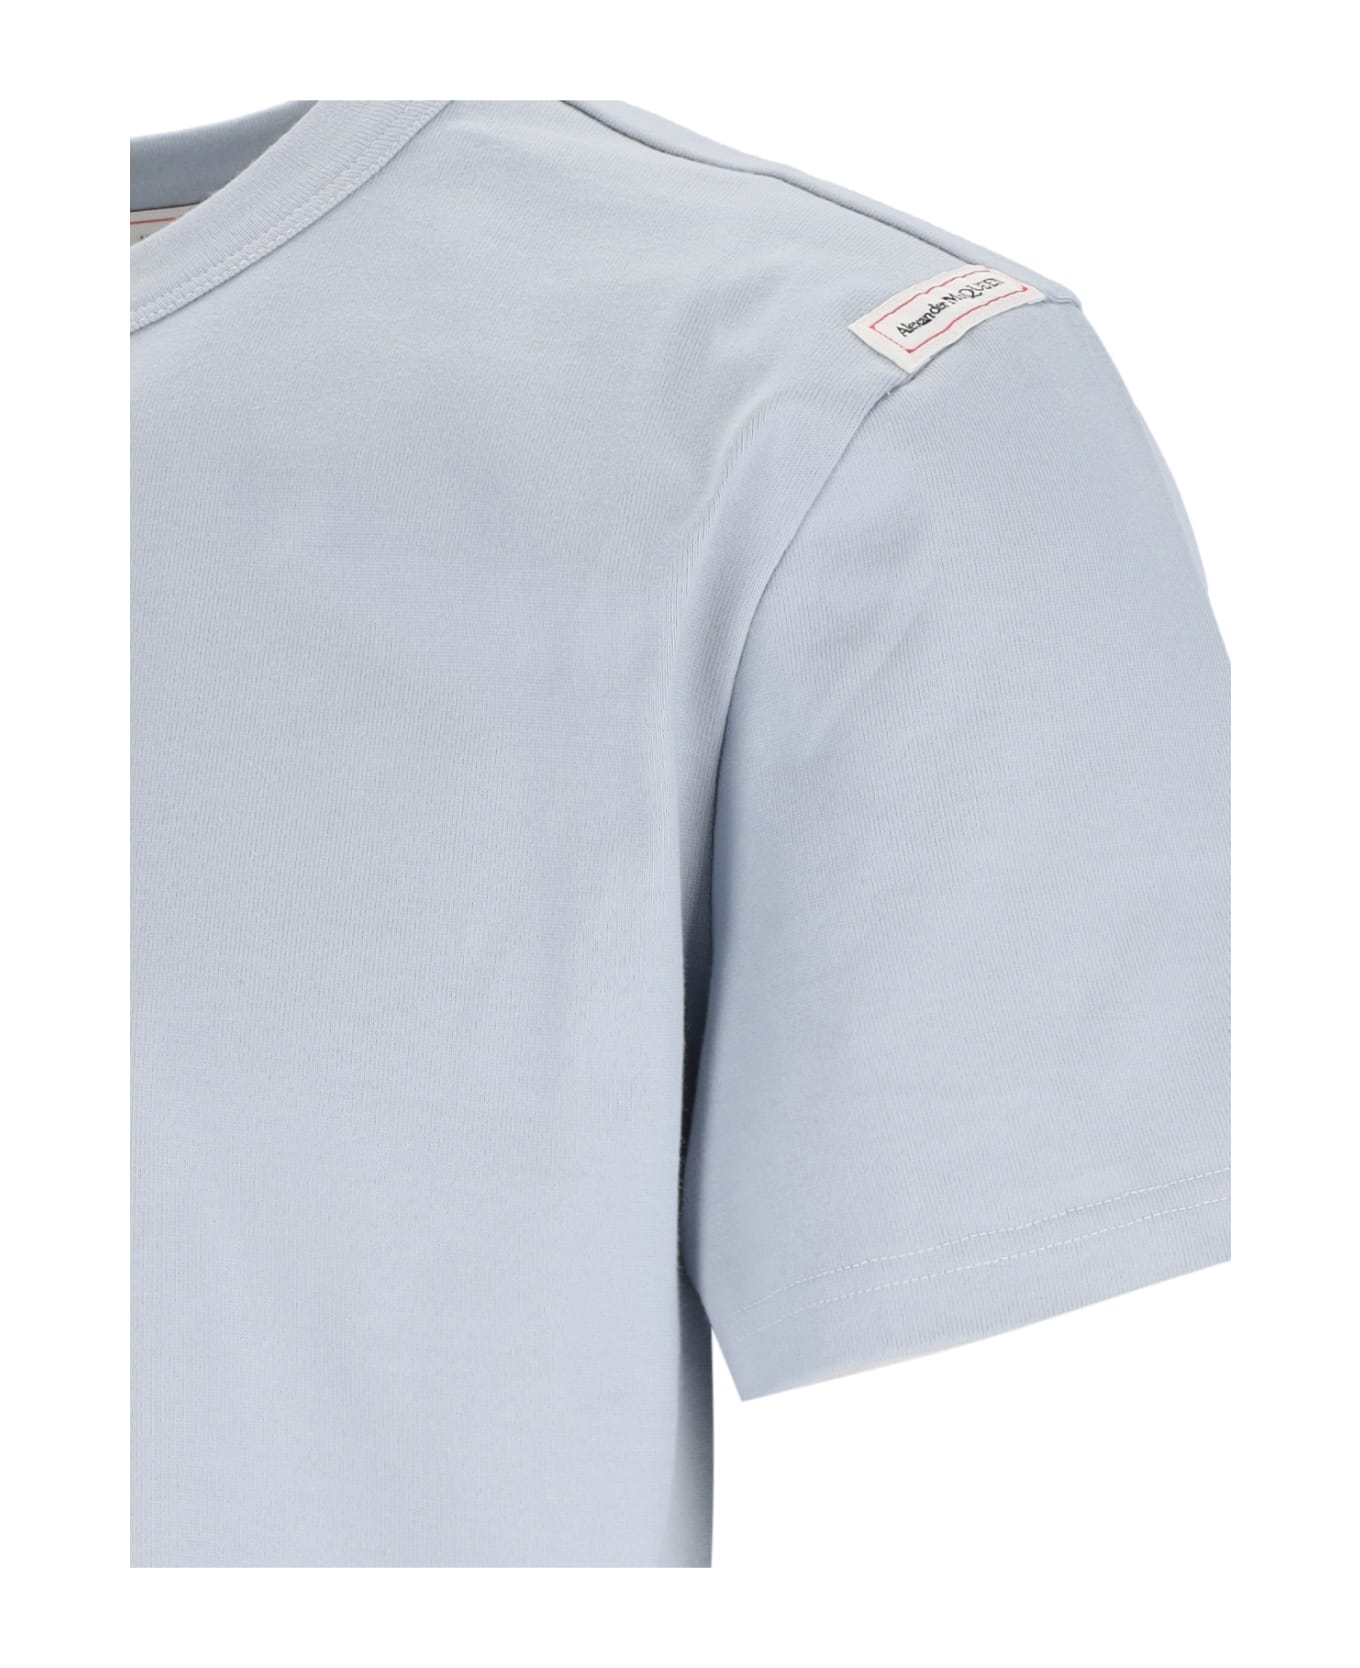 Alexander McQueen T-shirt - Grey シャツ